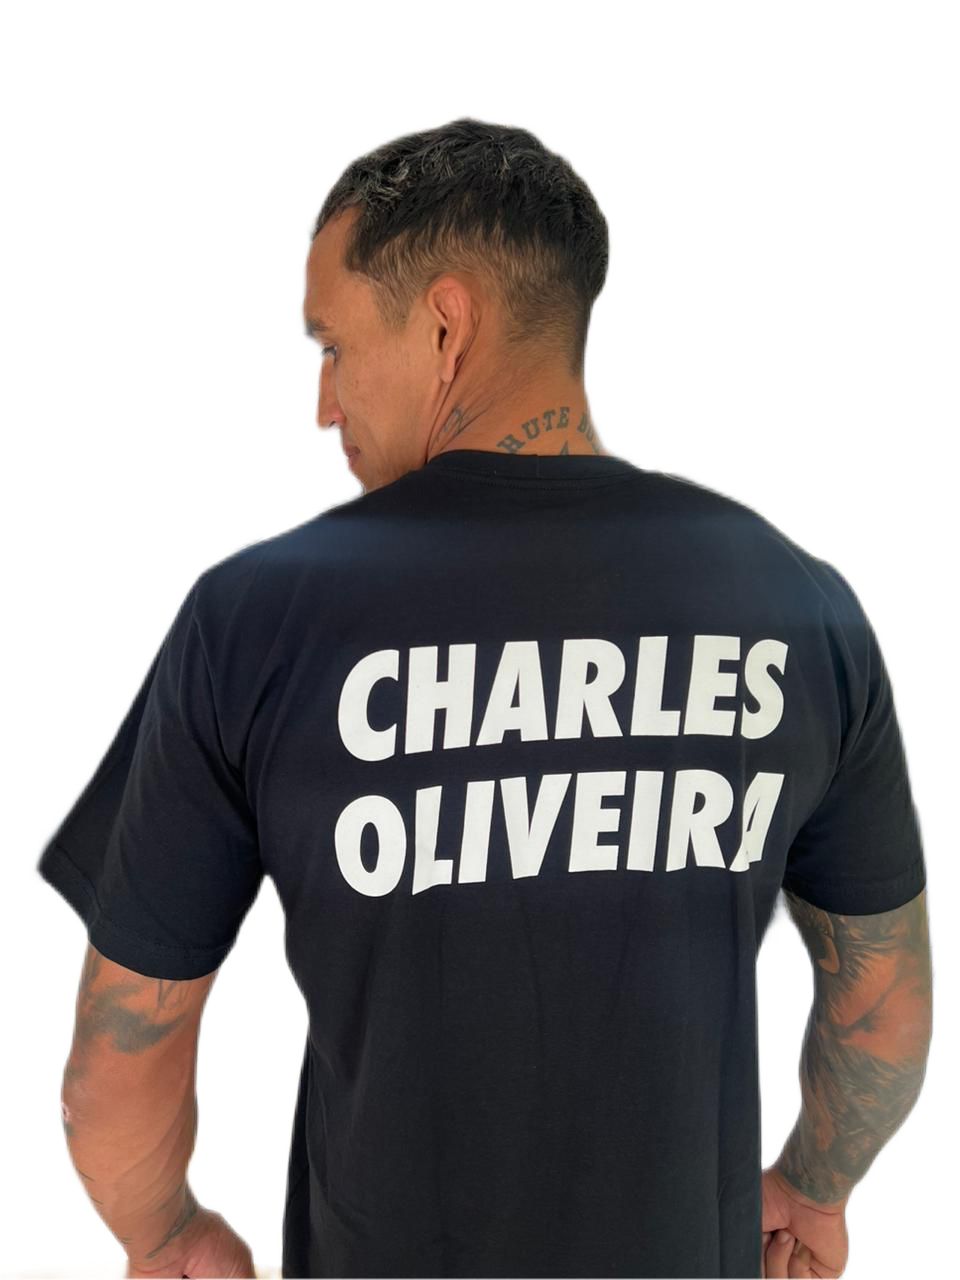 AUTOGRAFADA - Camiseta Charles Do Bronxs - CHAMPION HAS A NAME - CAMPEAO TEM NOME